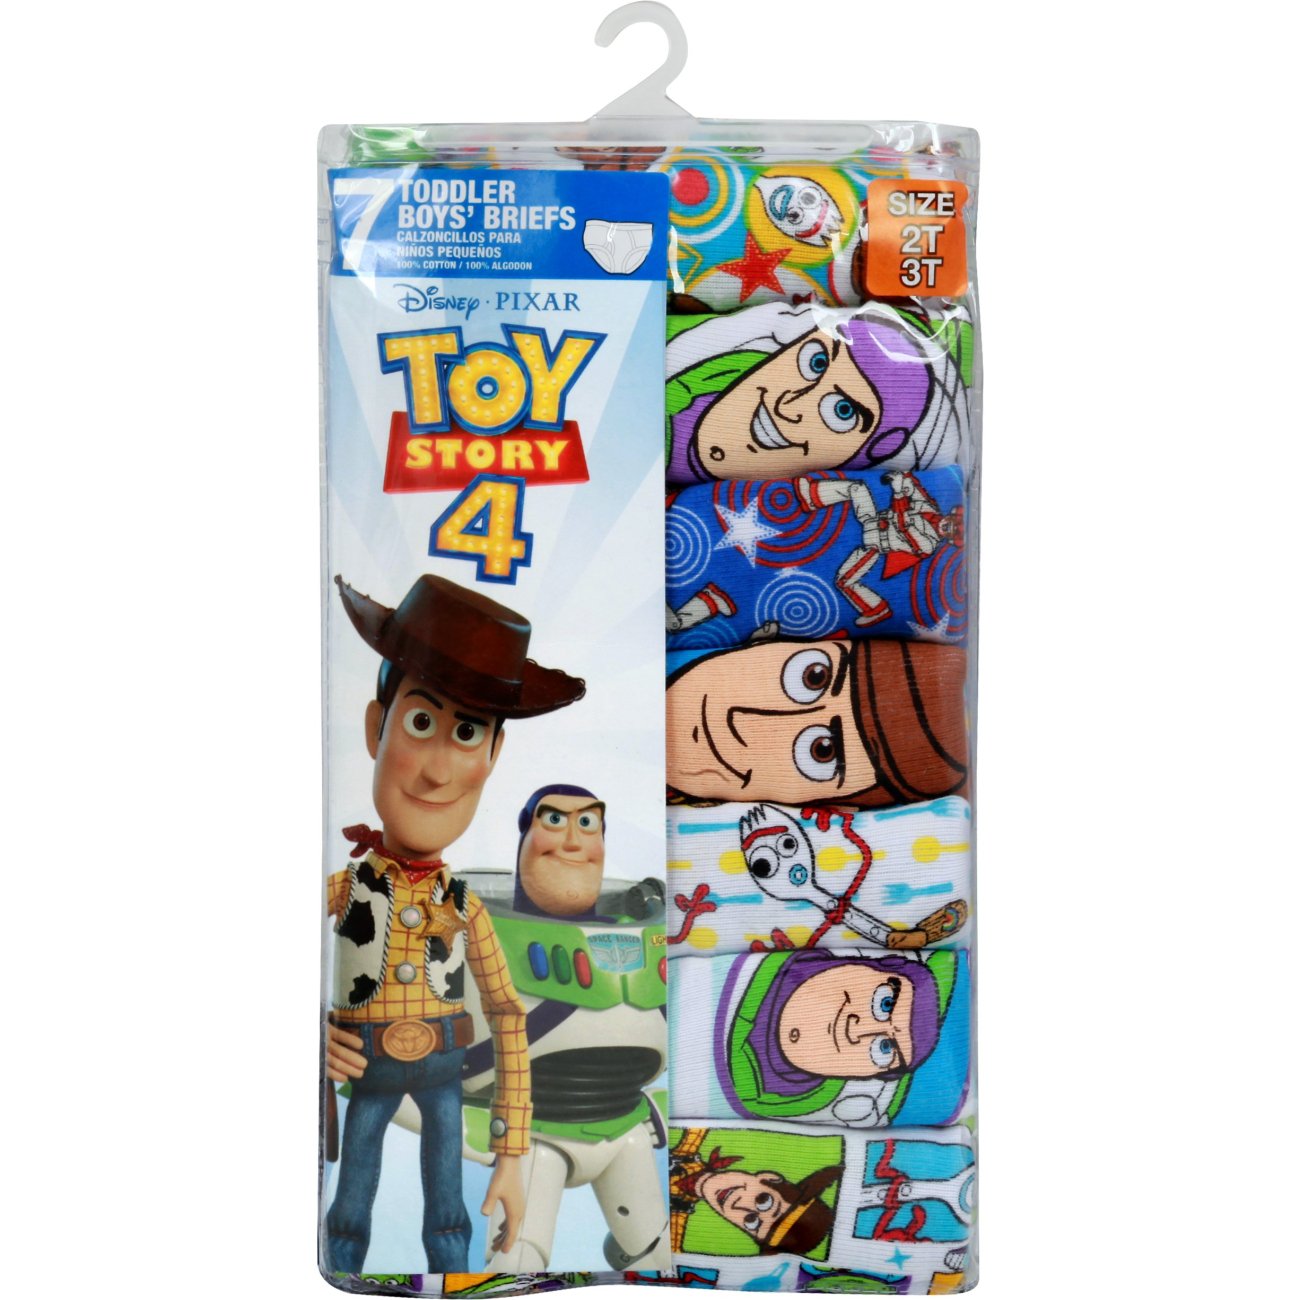 Handcraft Disney Pixar Toy Story 4 Toddler Boys' Day of the Week